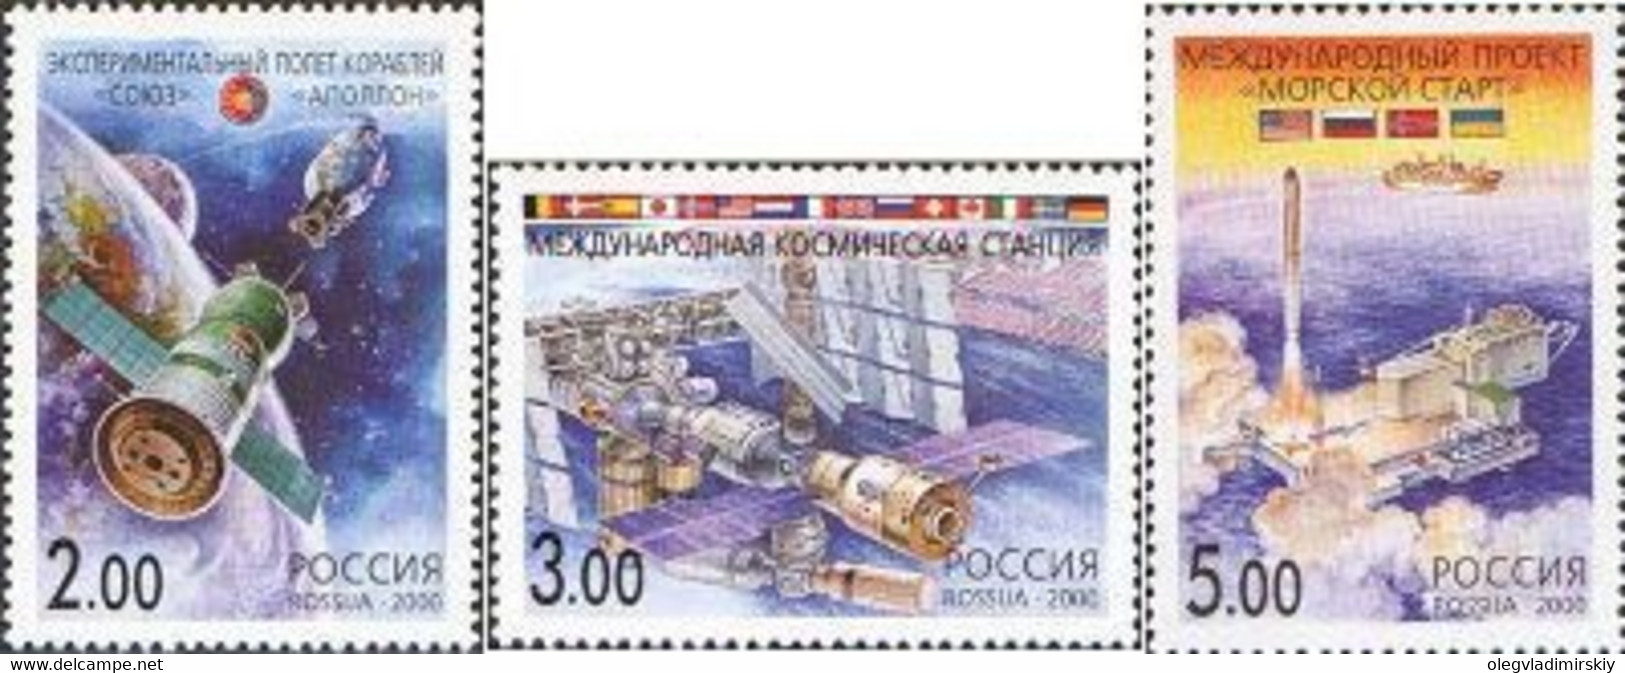 Russia 2000 Cosmonautics Day Set Of 3 Stamps - United States